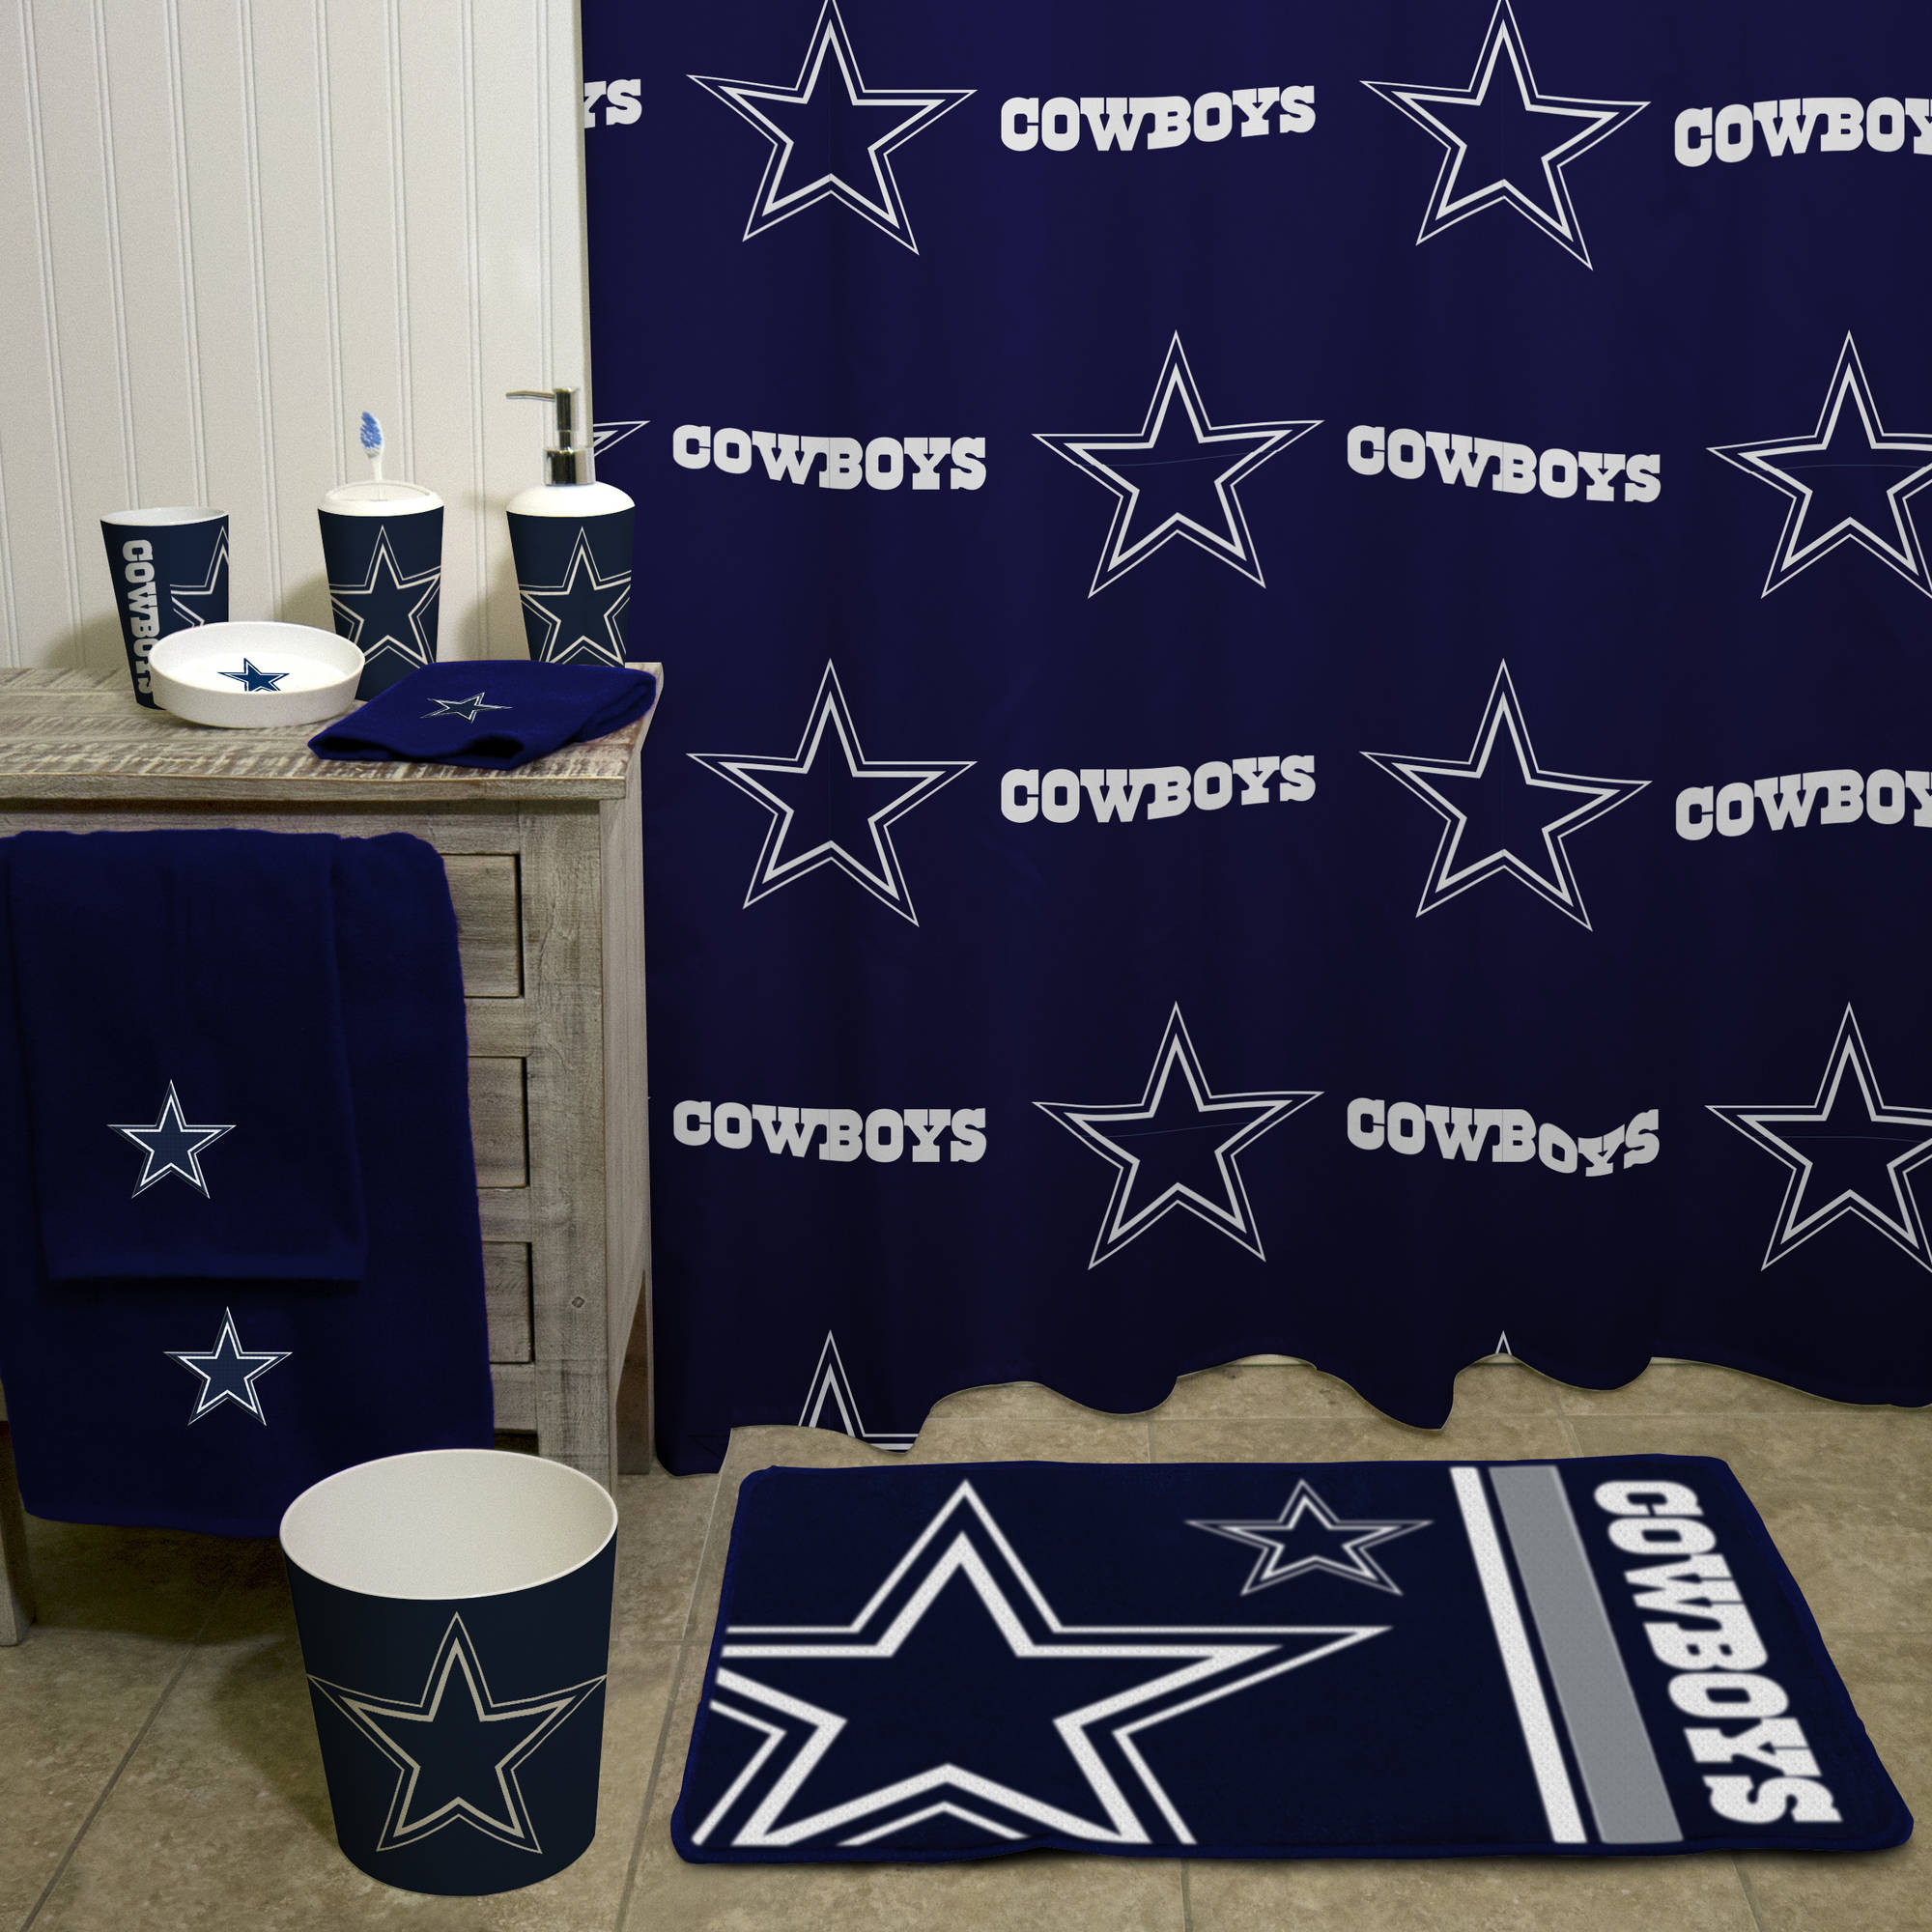 Dallas Cowboys Bathroom Decor
 Dallas Cowboys Outside Decor Home Decorating Ideas